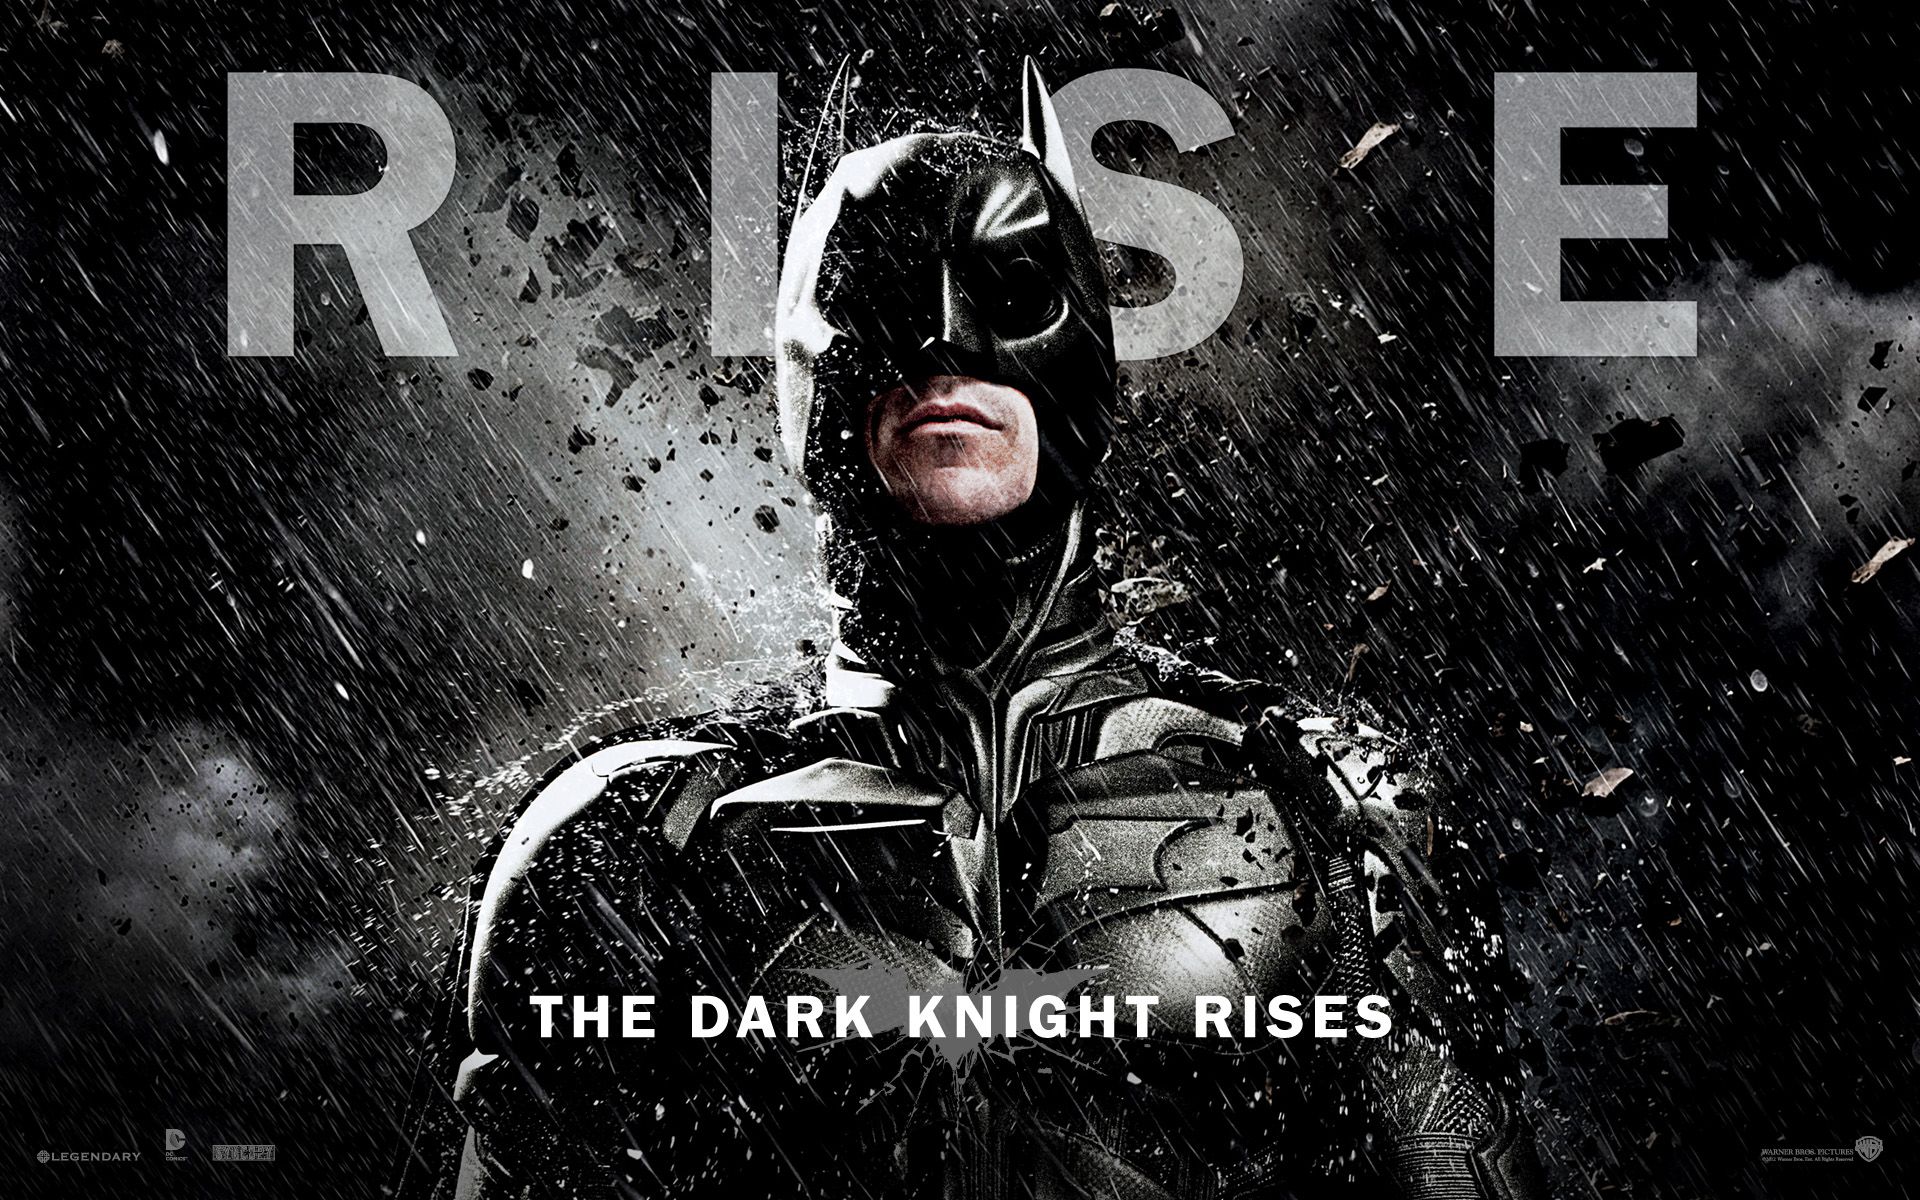 The Dark Knight Rises' Wallpapers: Decorate Your Desktop, Batman Style